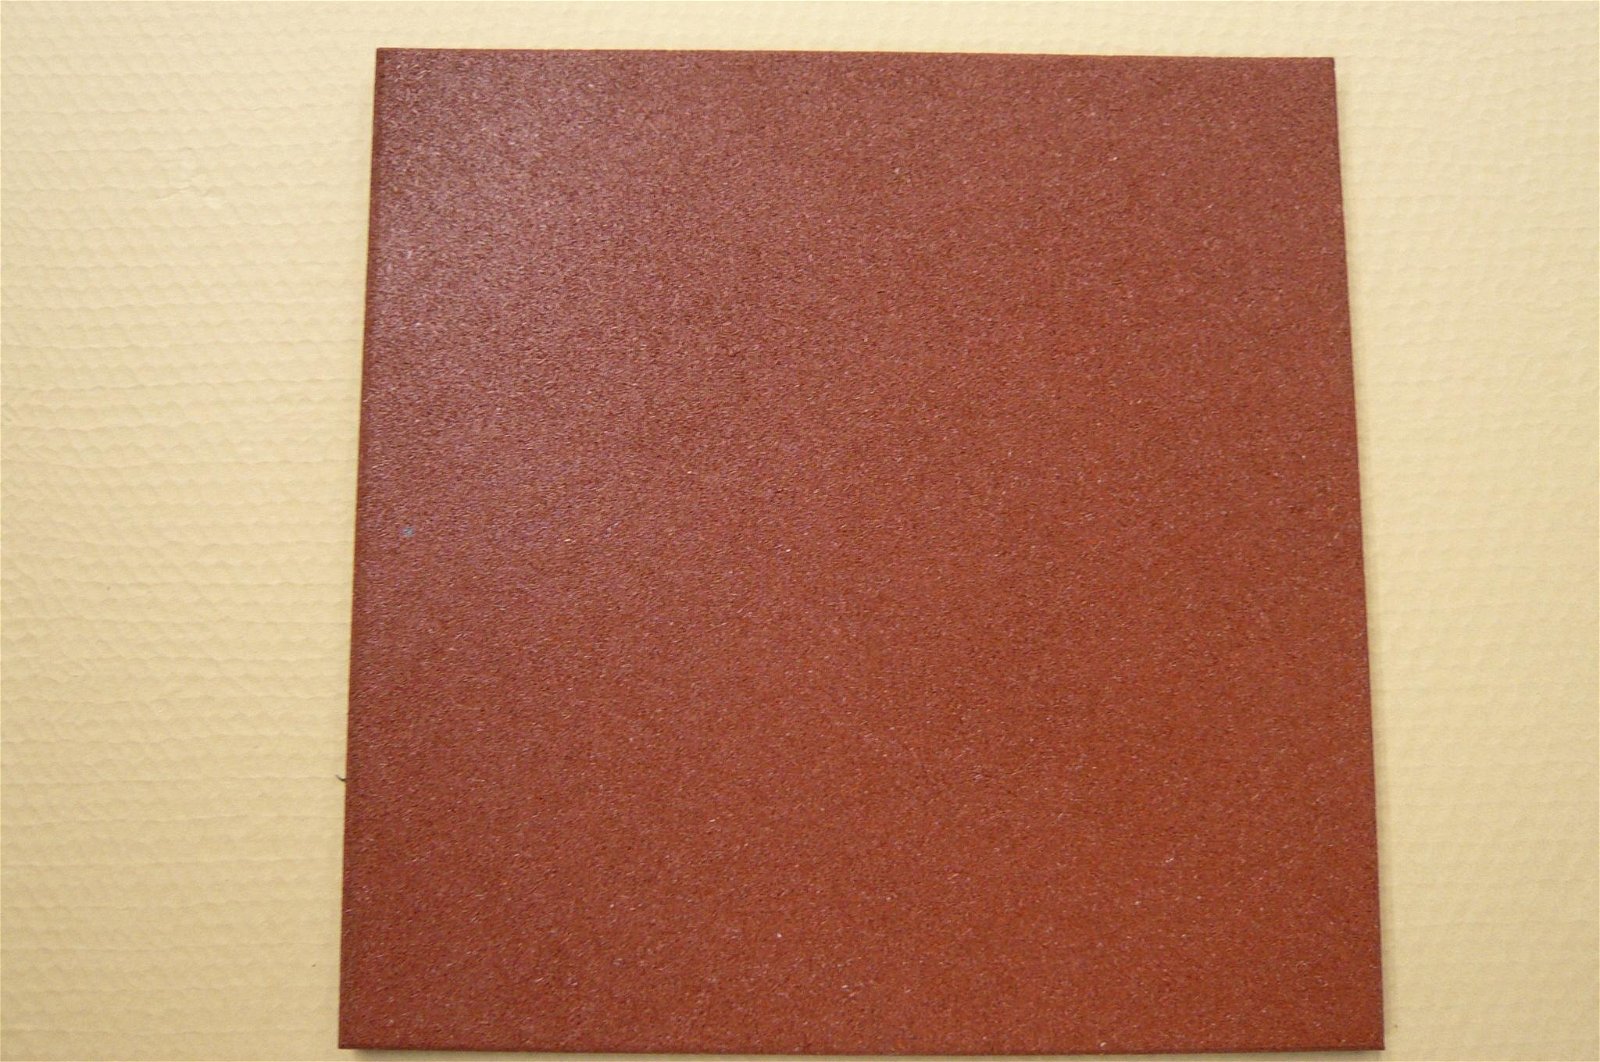 sbr rubber mats colorful flooring tile  5